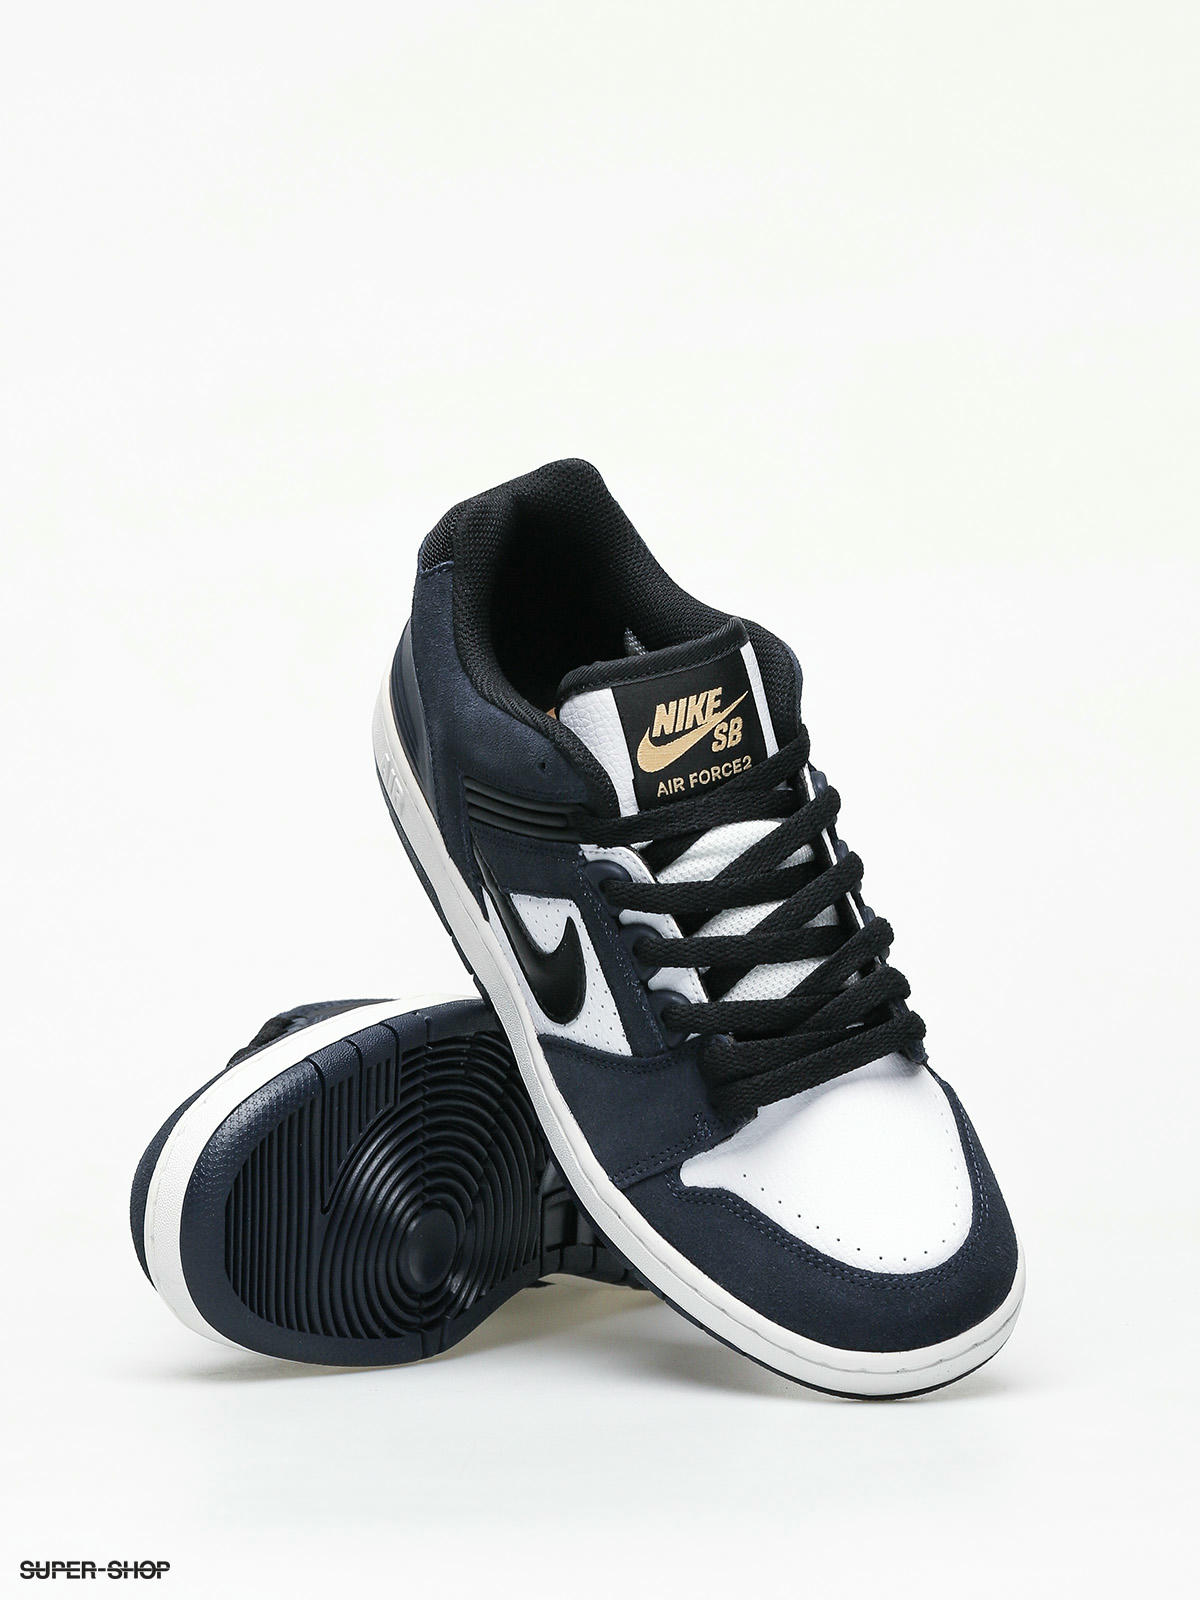 Nike SB Air Force II Low Shoes 